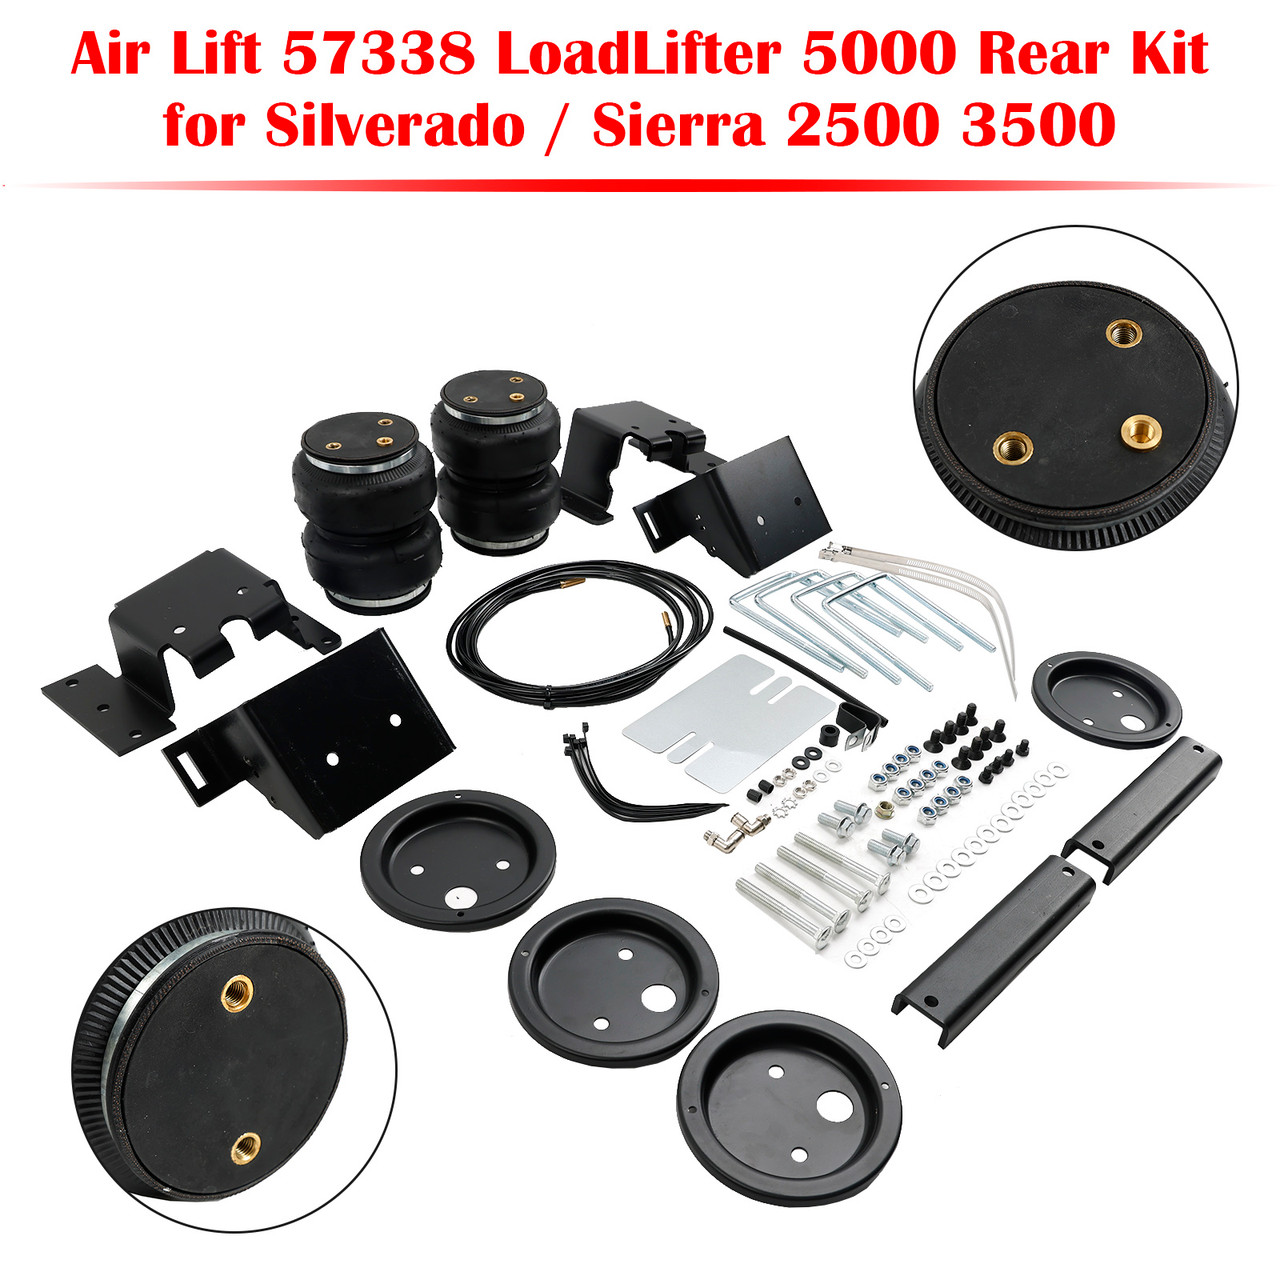 Air Lift 57338 LoadLifter 5000 Rear Kit for Silverado / Sierra 2500 3500